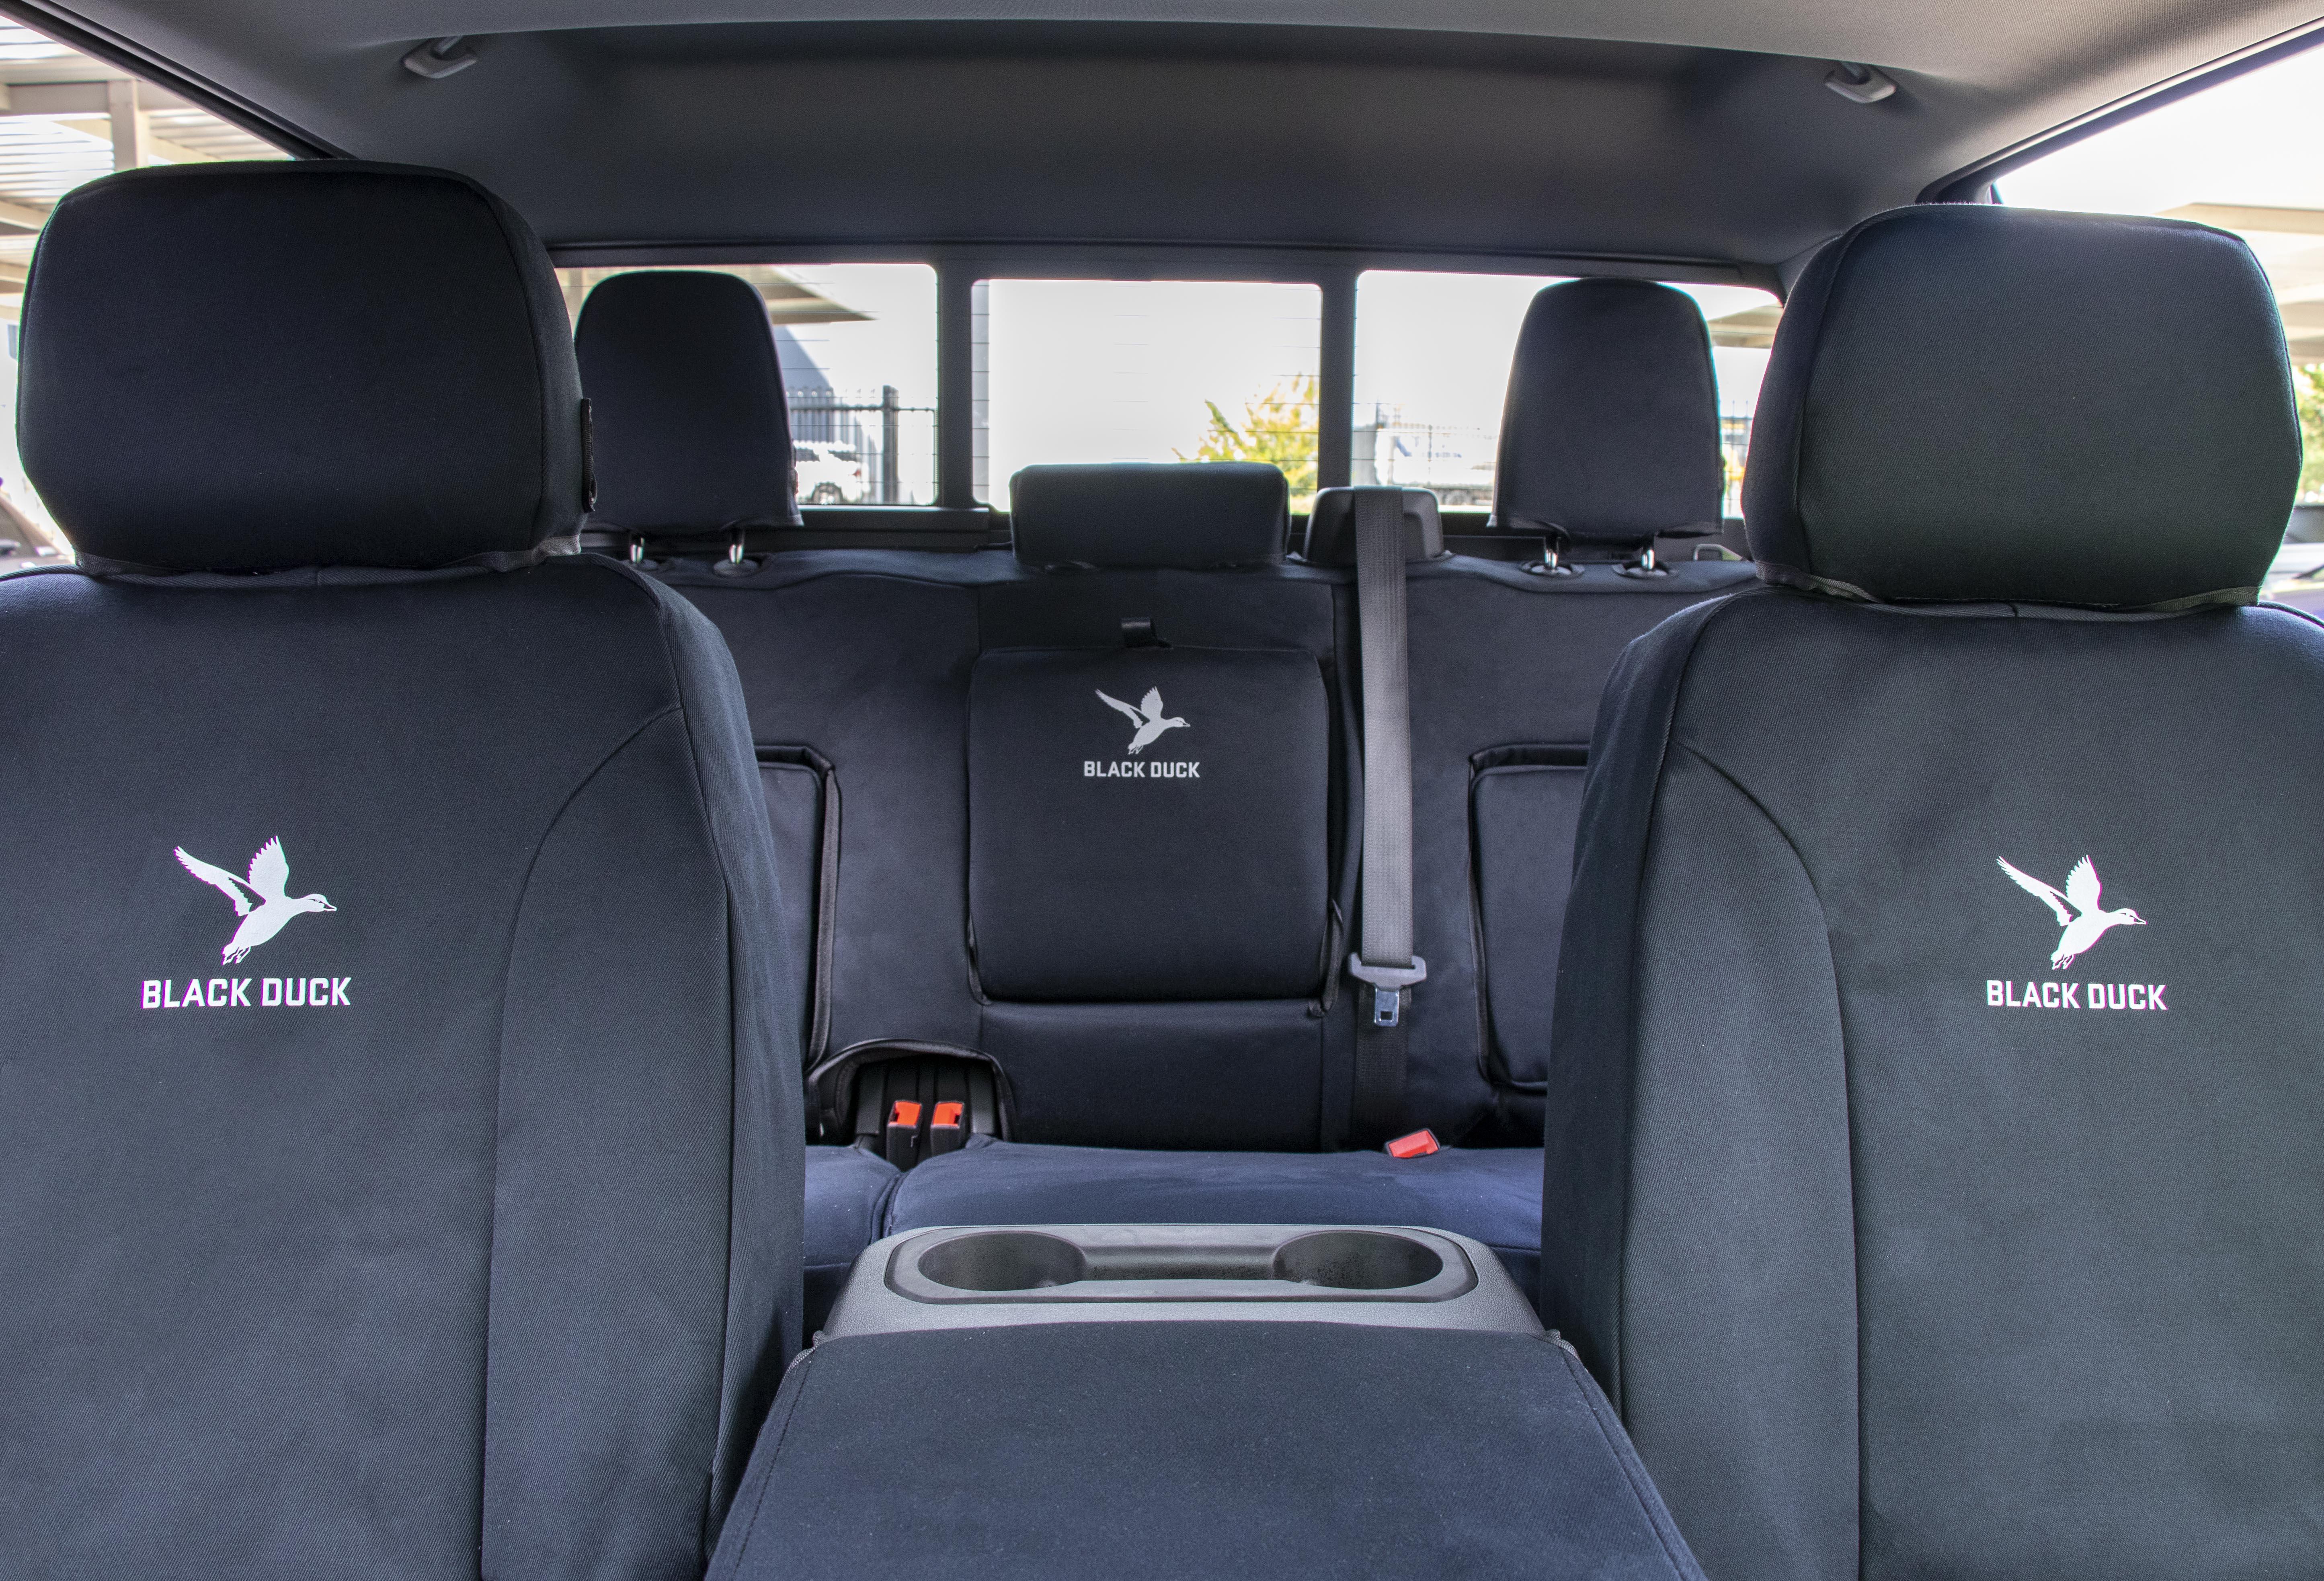 Chevrolet Silverado seat covers in 4Elements